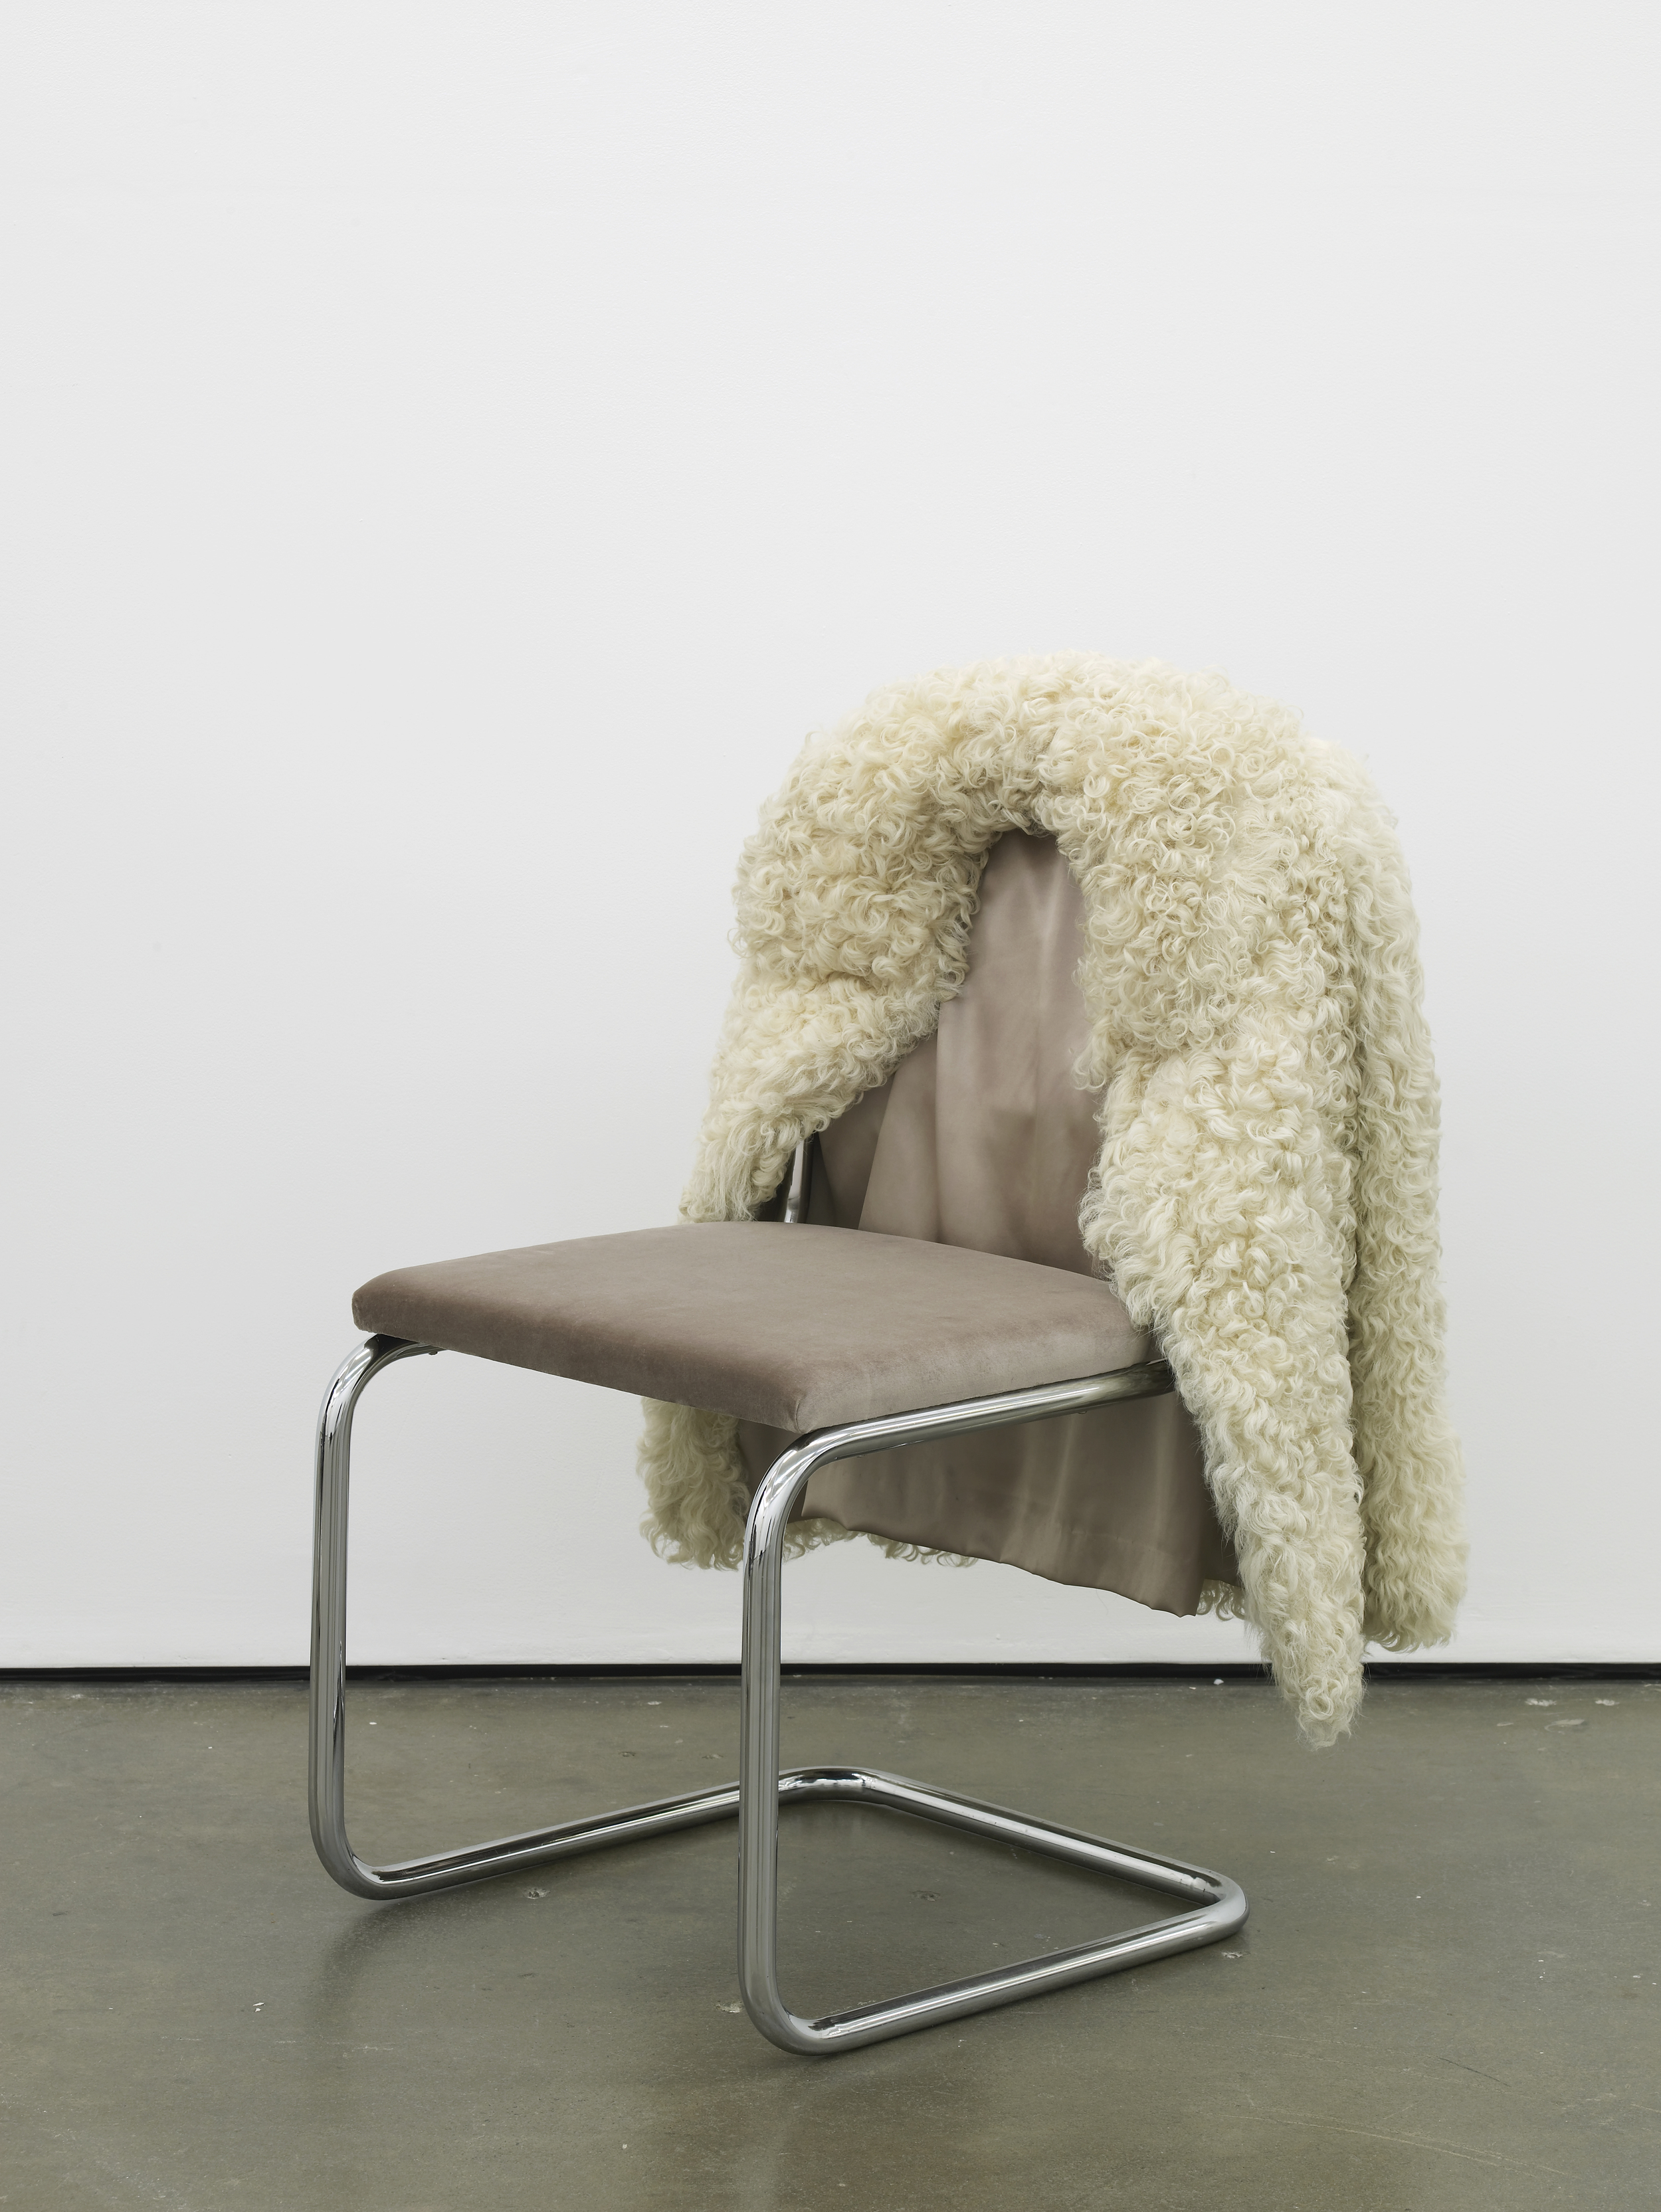     Untitled Chair - AL-0 &nbsp; &nbsp; &nbsp; &nbsp; &nbsp;&nbsp; 2015 Vintage fur, steel tubing, upholstery, silk and velvet 85 x 65 x 60 cm / 33.4 x 25.5 x 23.6 in 